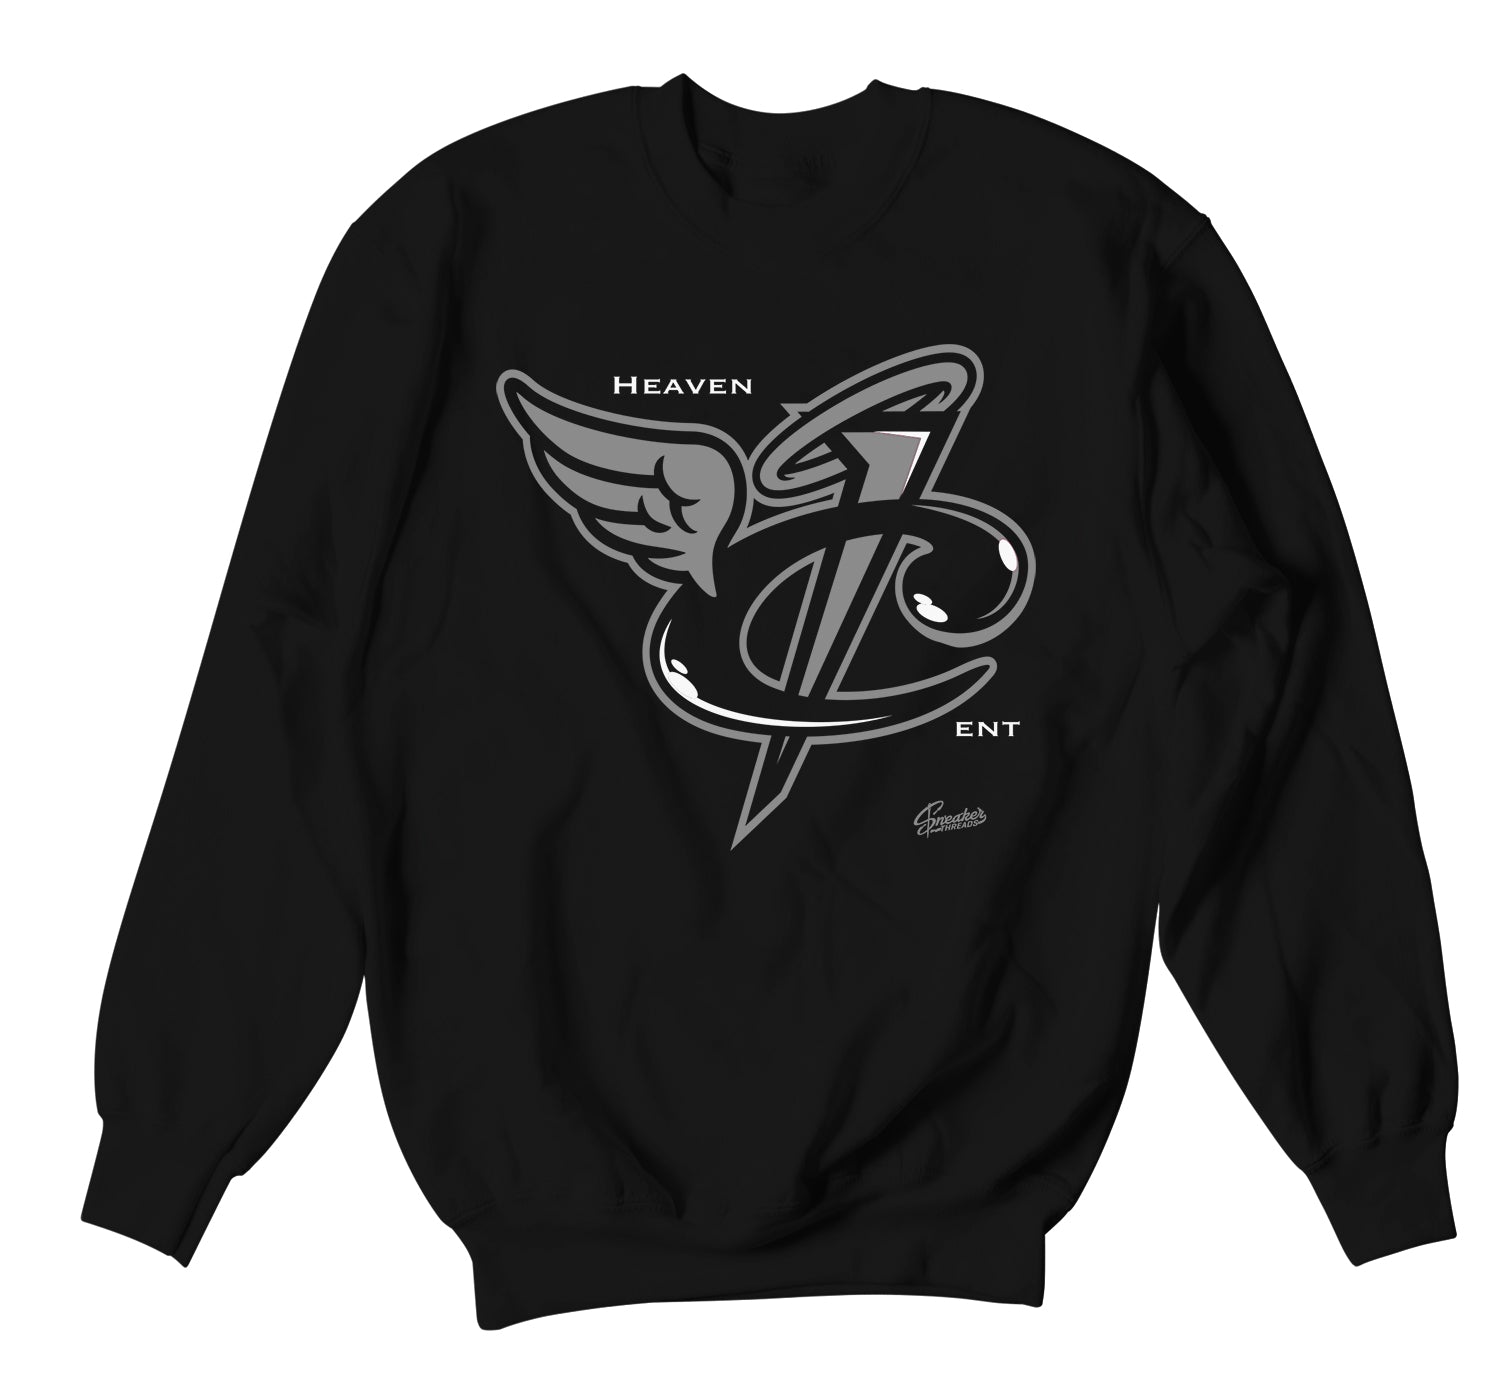 Foamposite Anthracite Sweater - Heaven Cent - Black